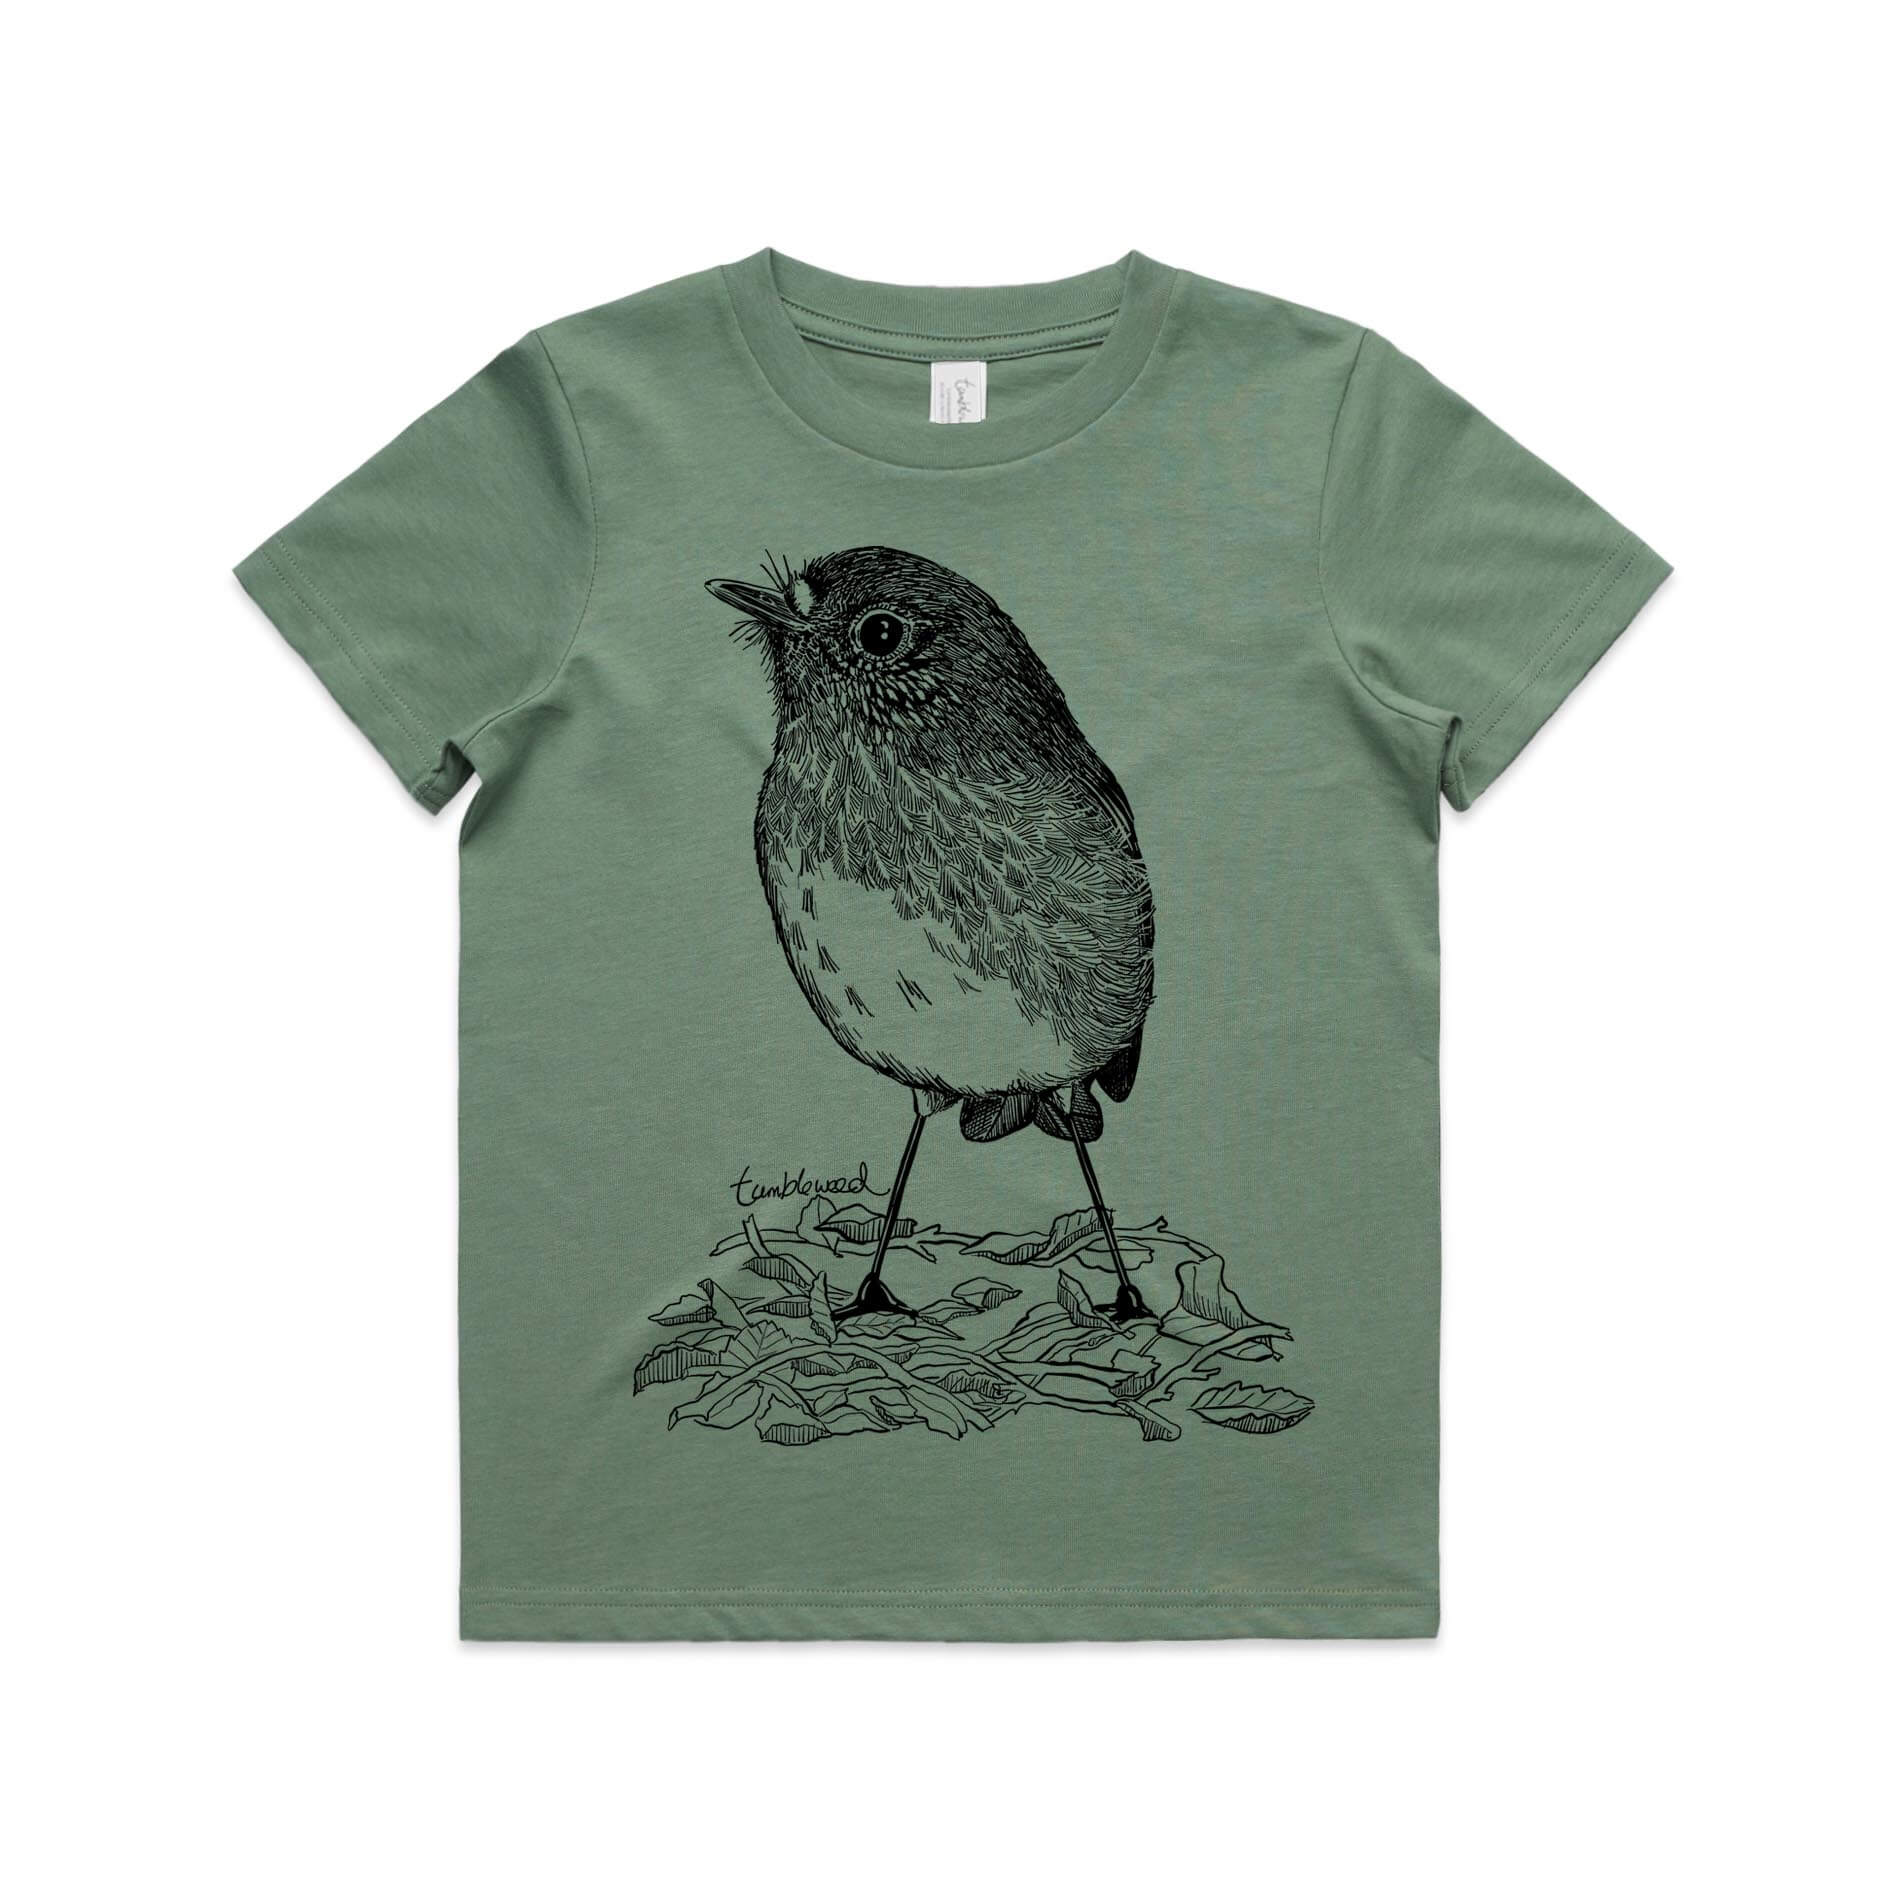 Sage, cotton kids' t-shirt with screen printed North Island robin/toutouwai design.